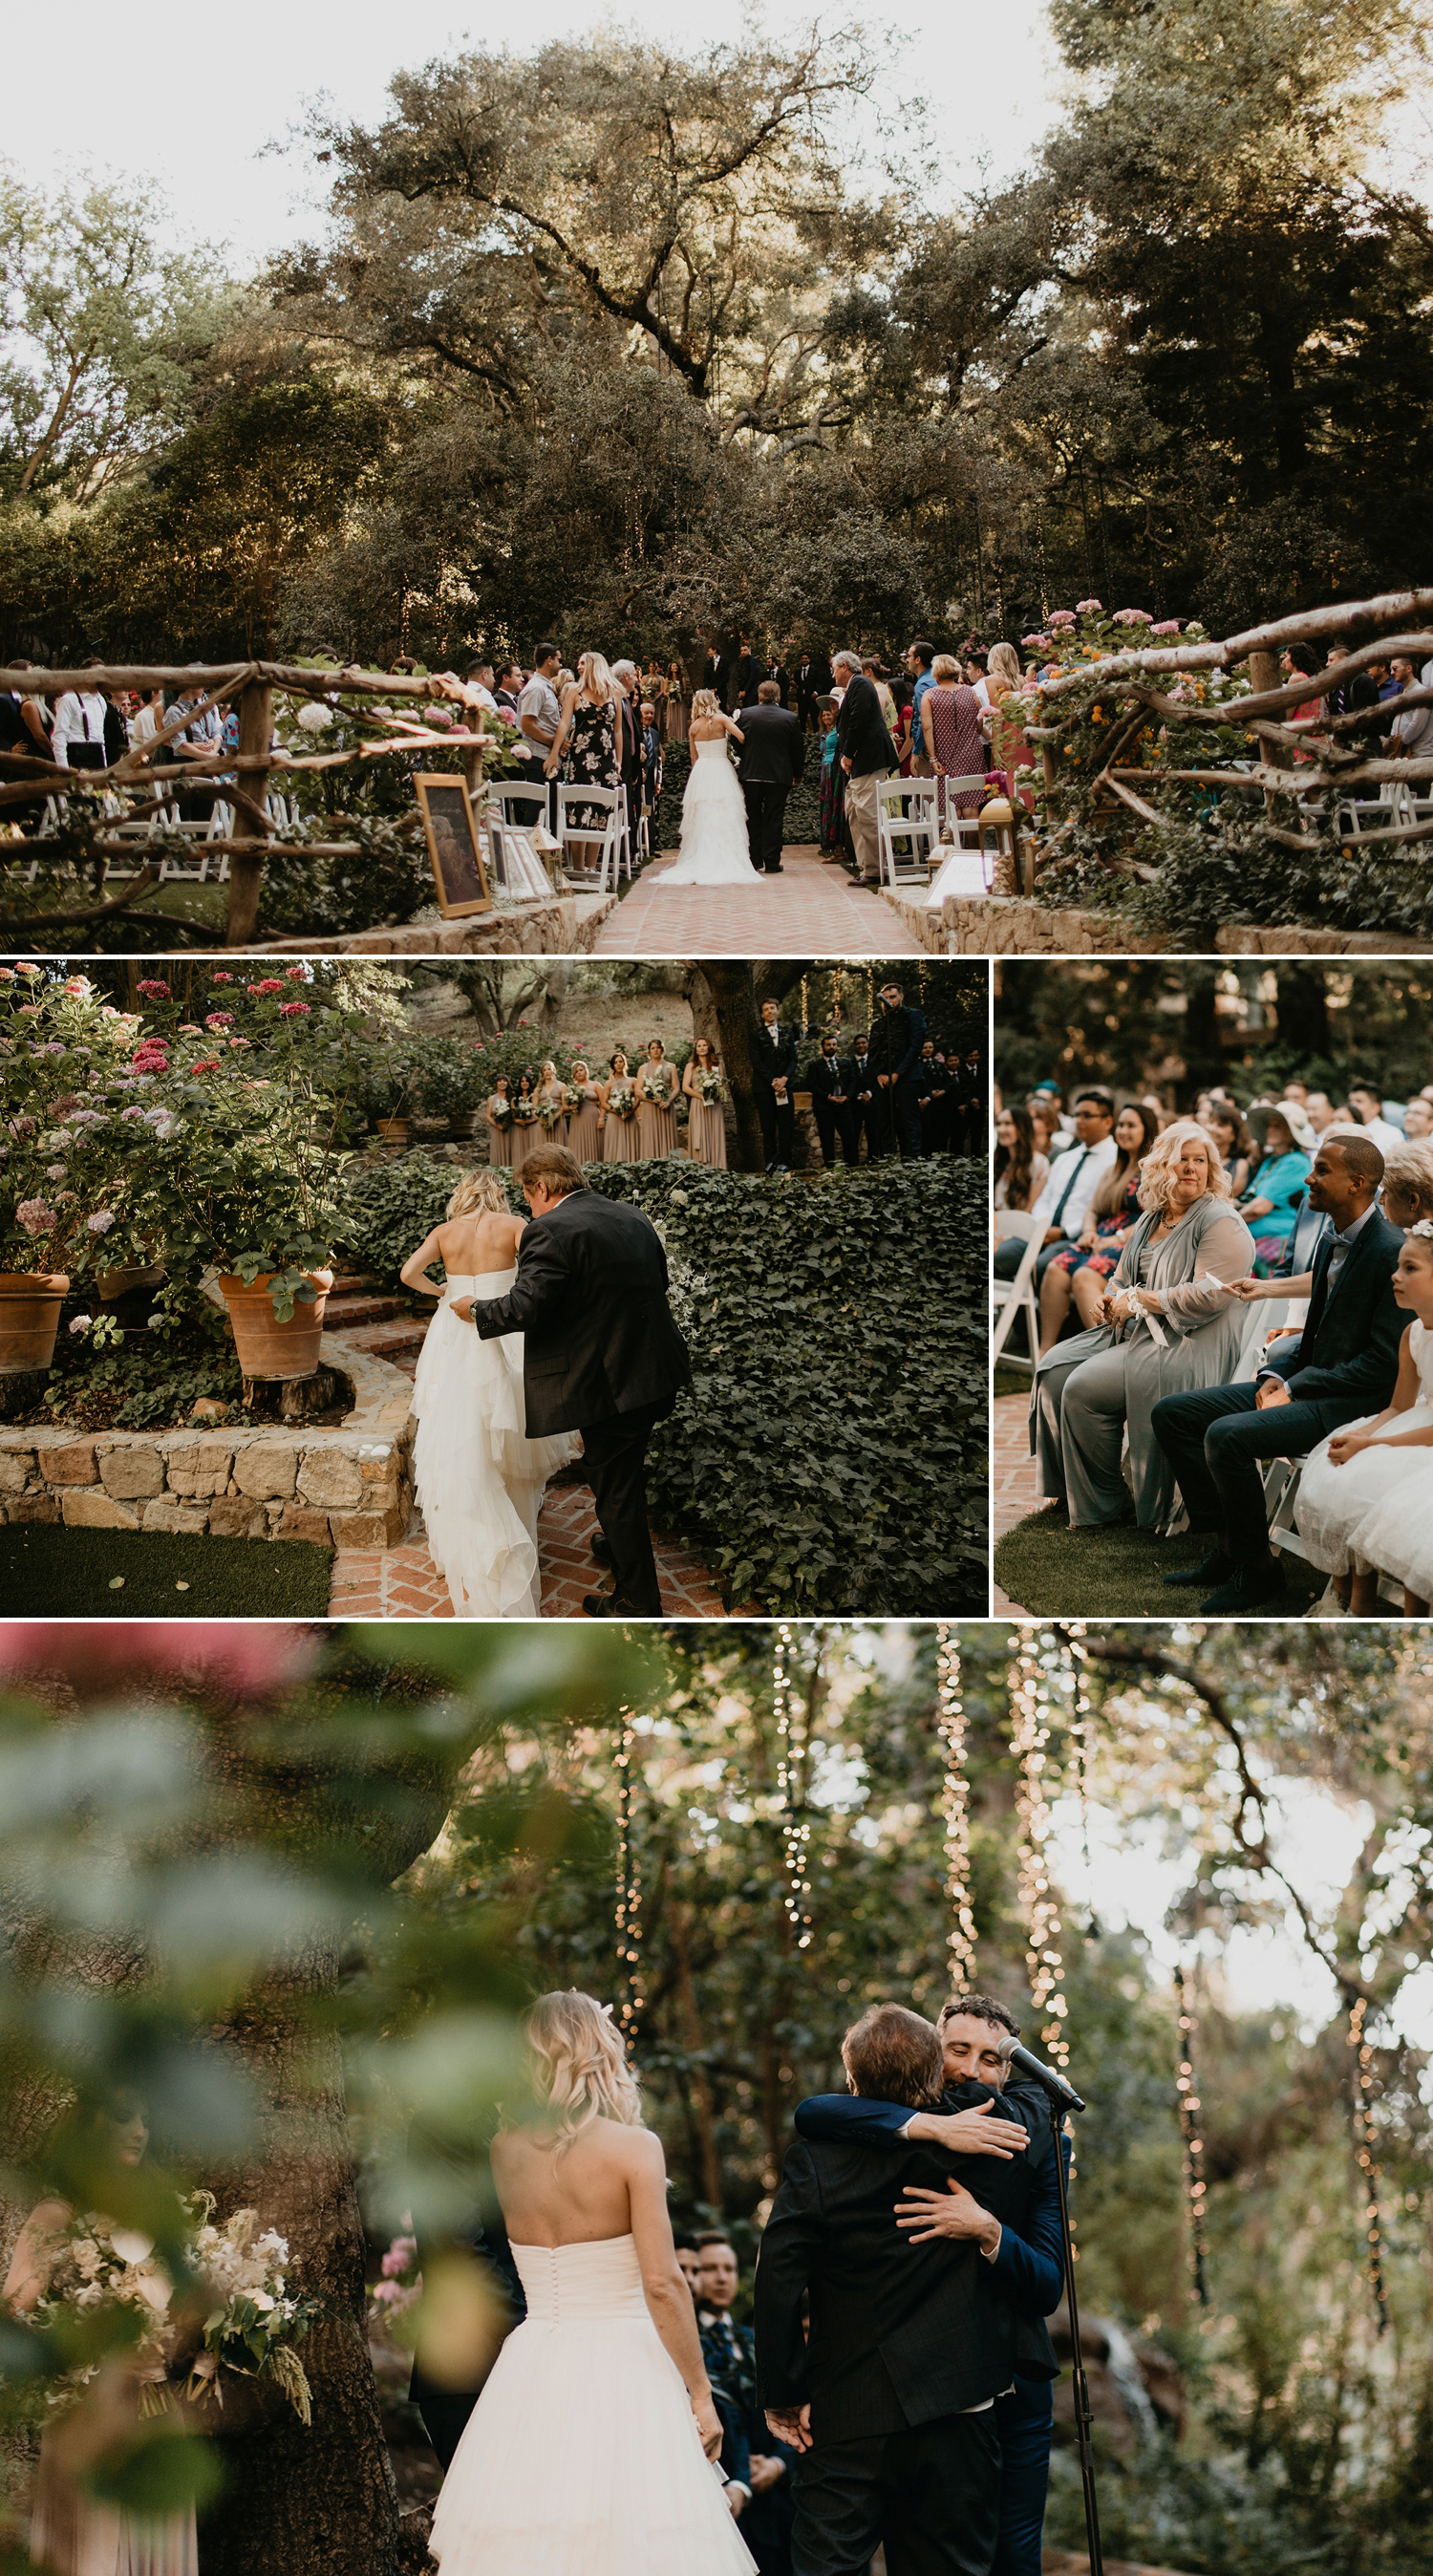 A festival themed wedding at Calamigos Ranch in Malibu, California by Kadi Tobin Photographer